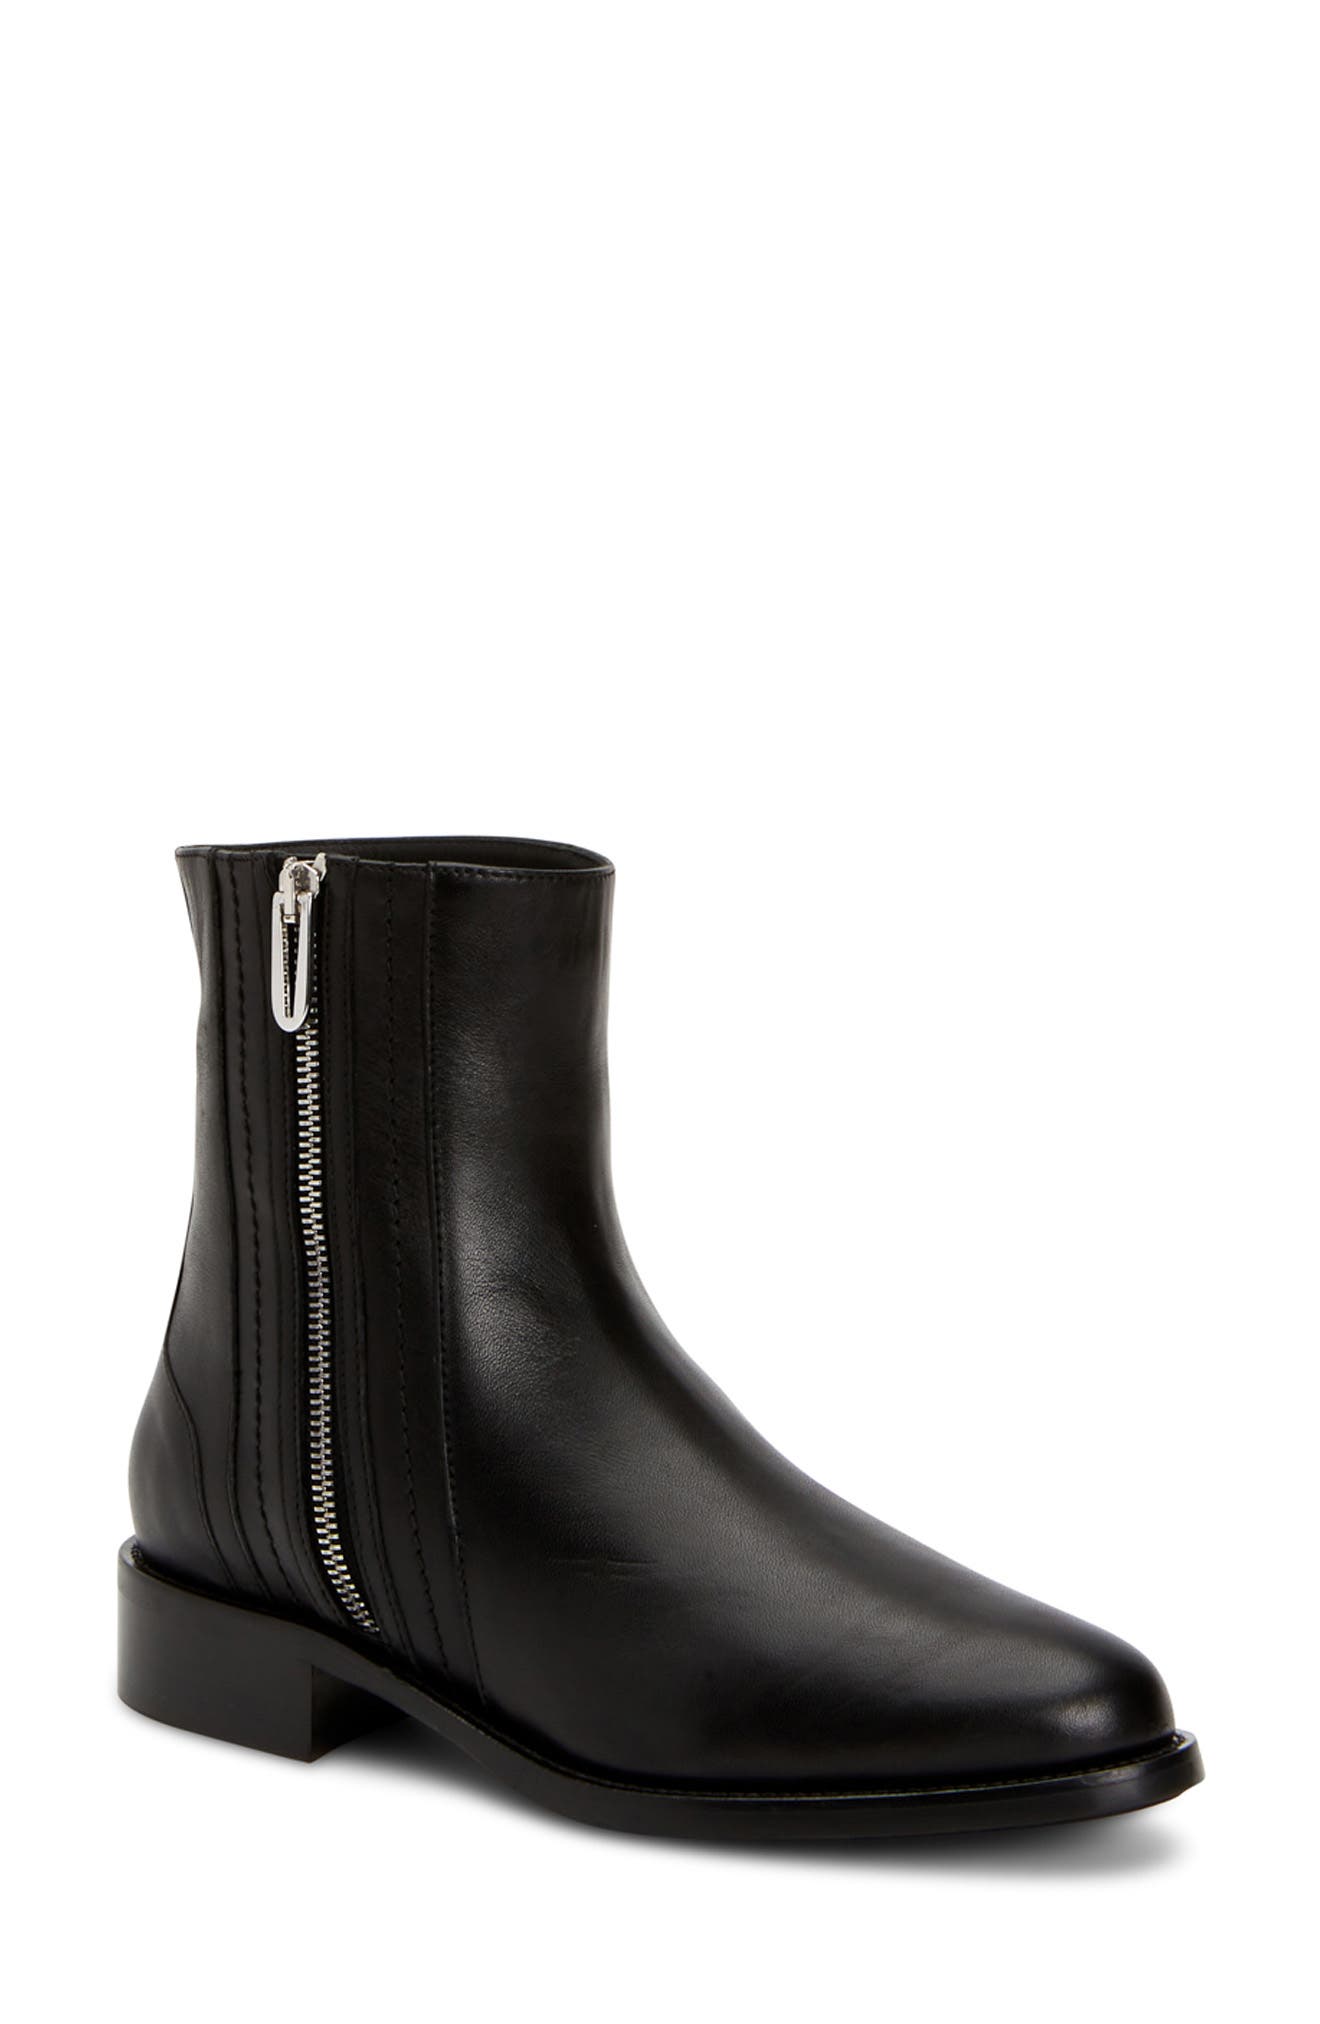 aquatalia patent leather boots